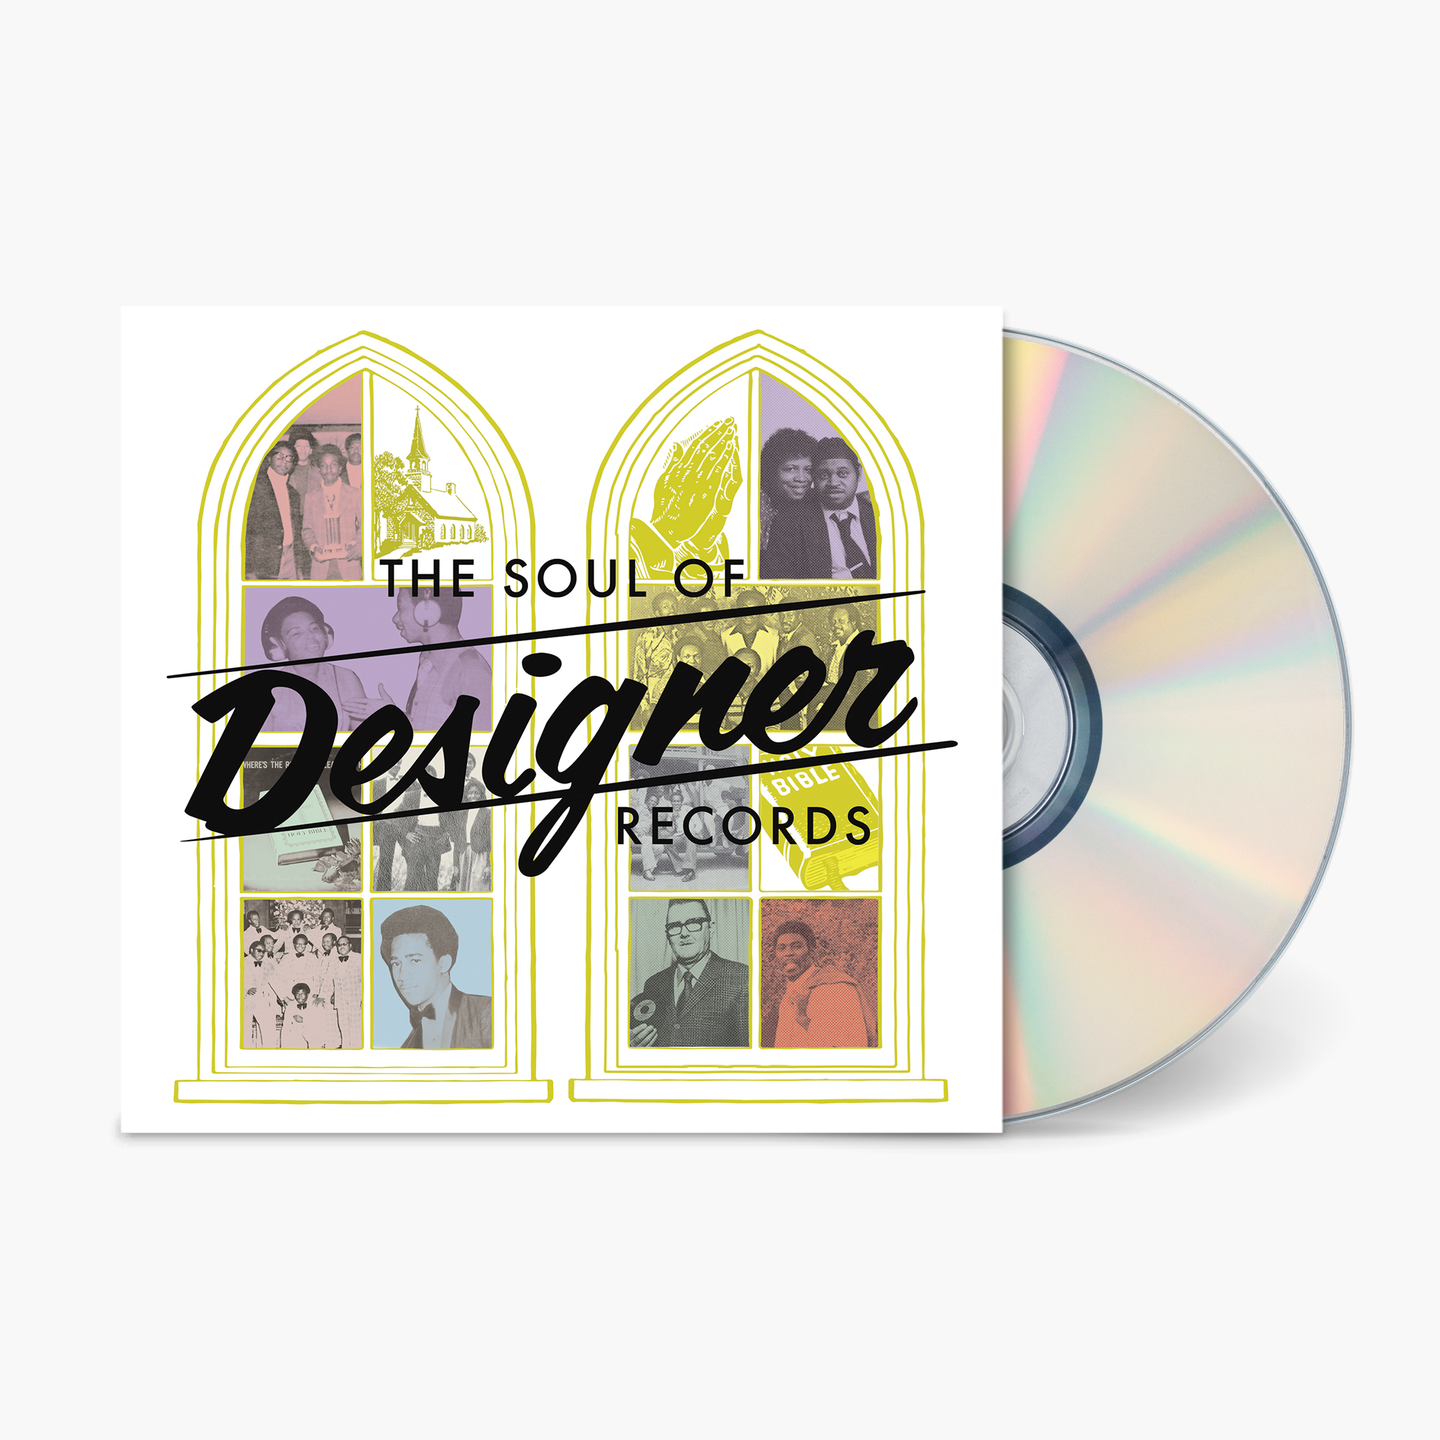 The Soul of Designer Records